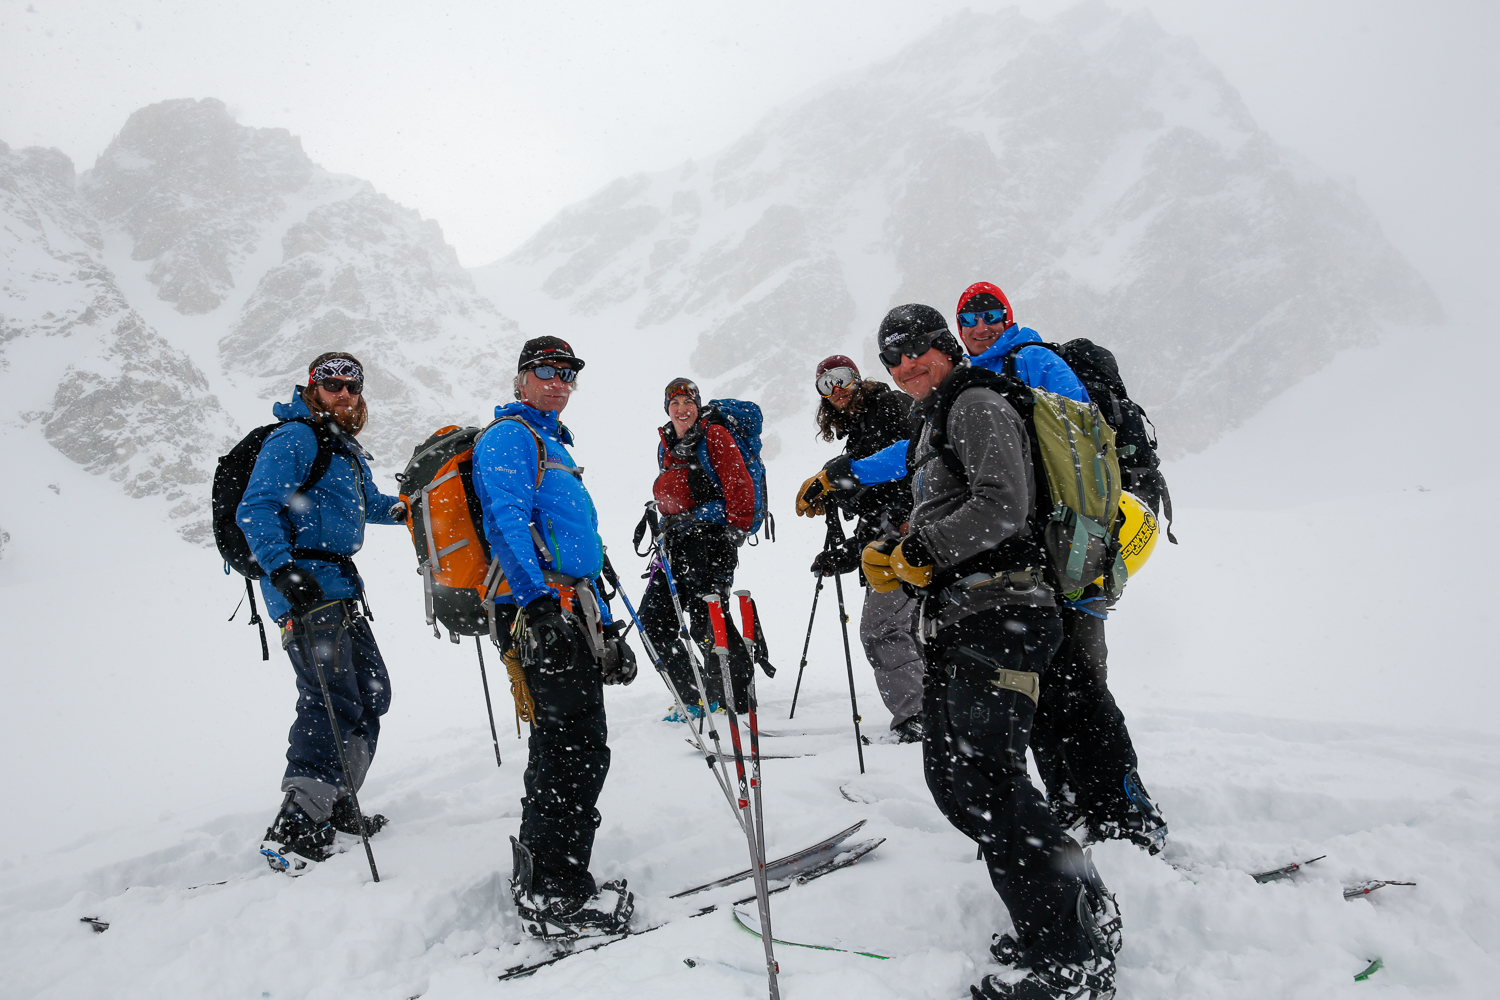 Exum Splitboard Mountaineering Camp 2015
Photo © David Stubbs